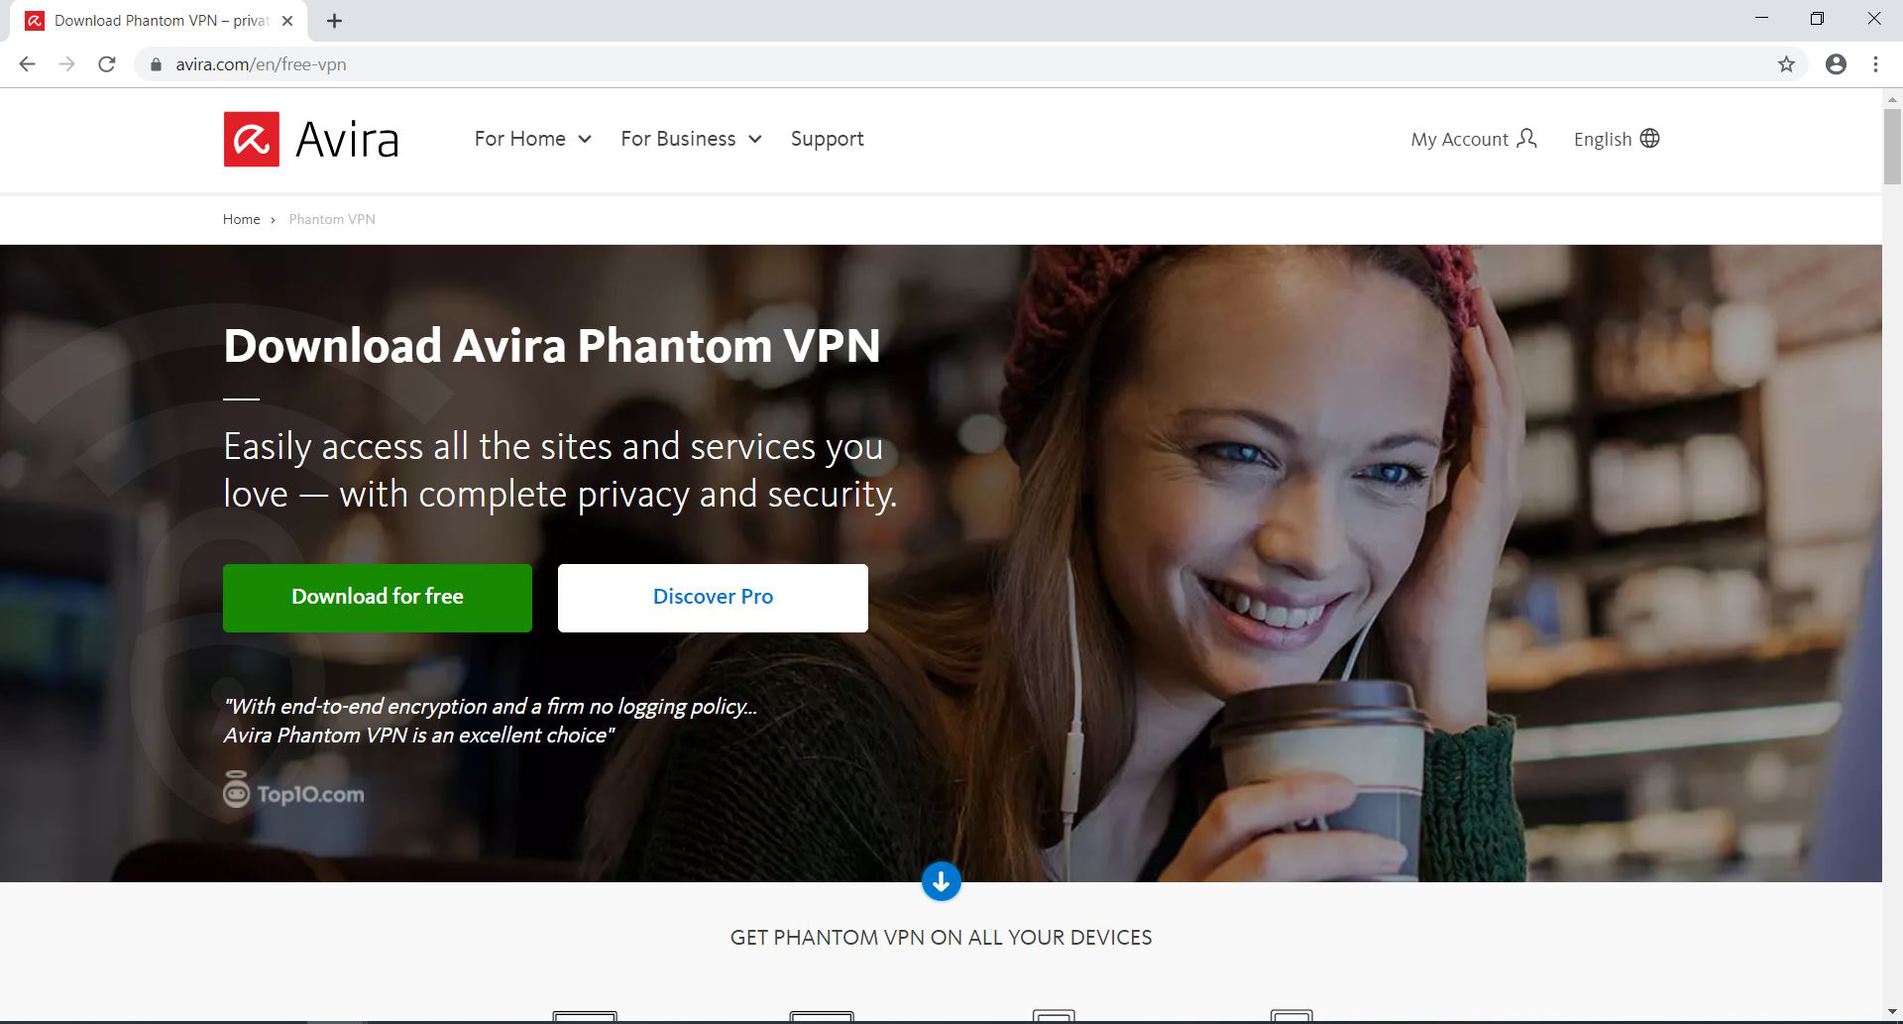 Avira Phantom VPN download page